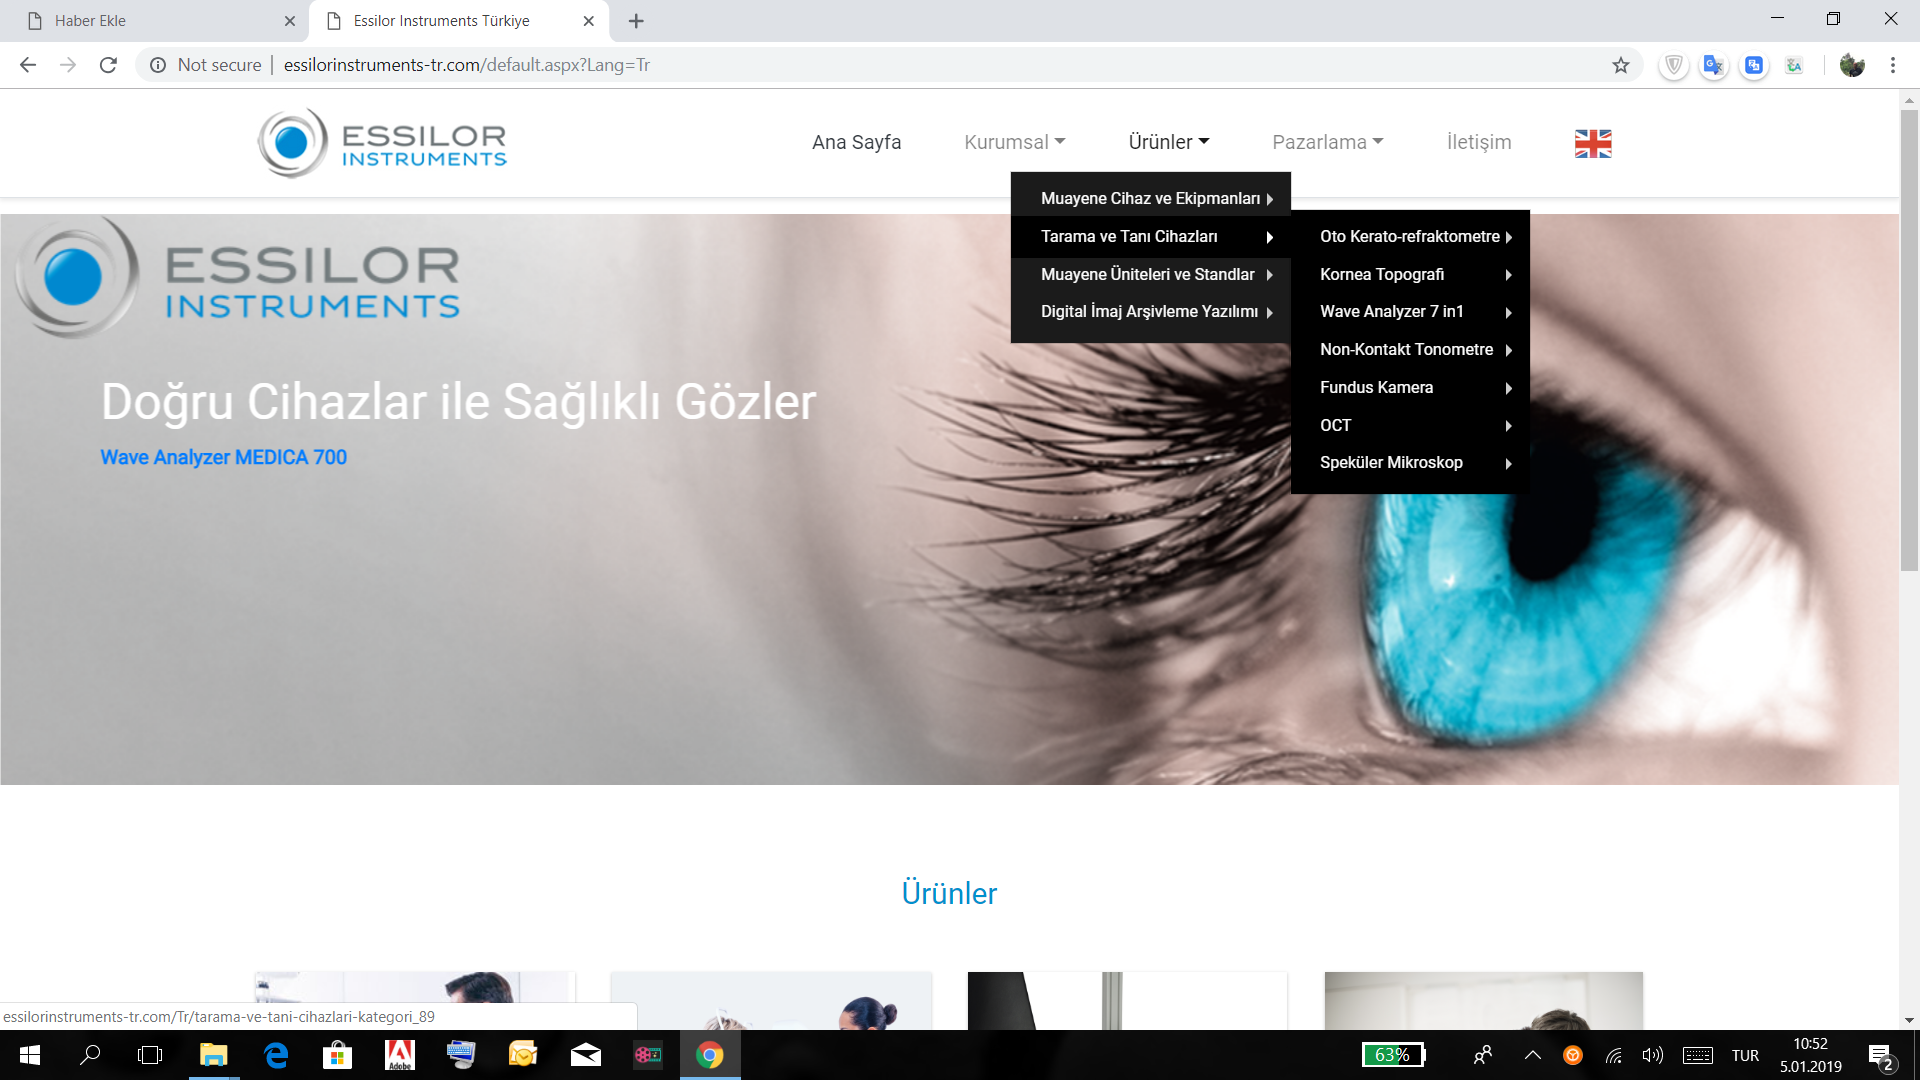 Essilor Instruments Türkiye  Website is Online